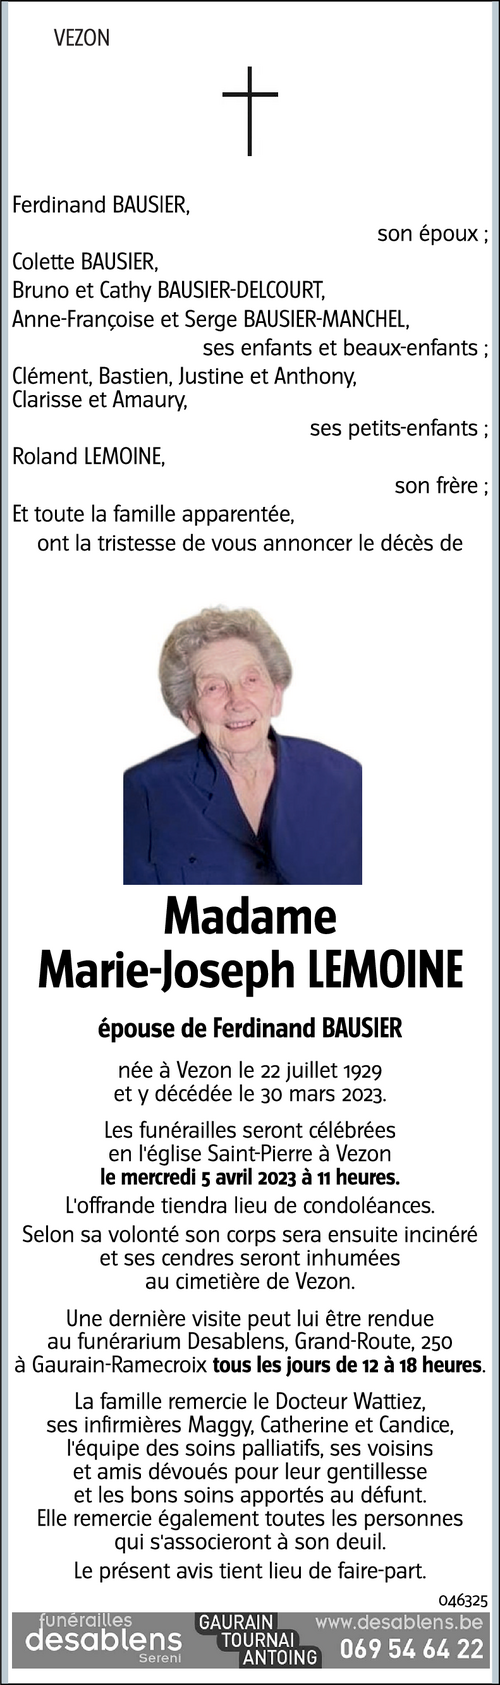 Marie-Joseph LEMOINE